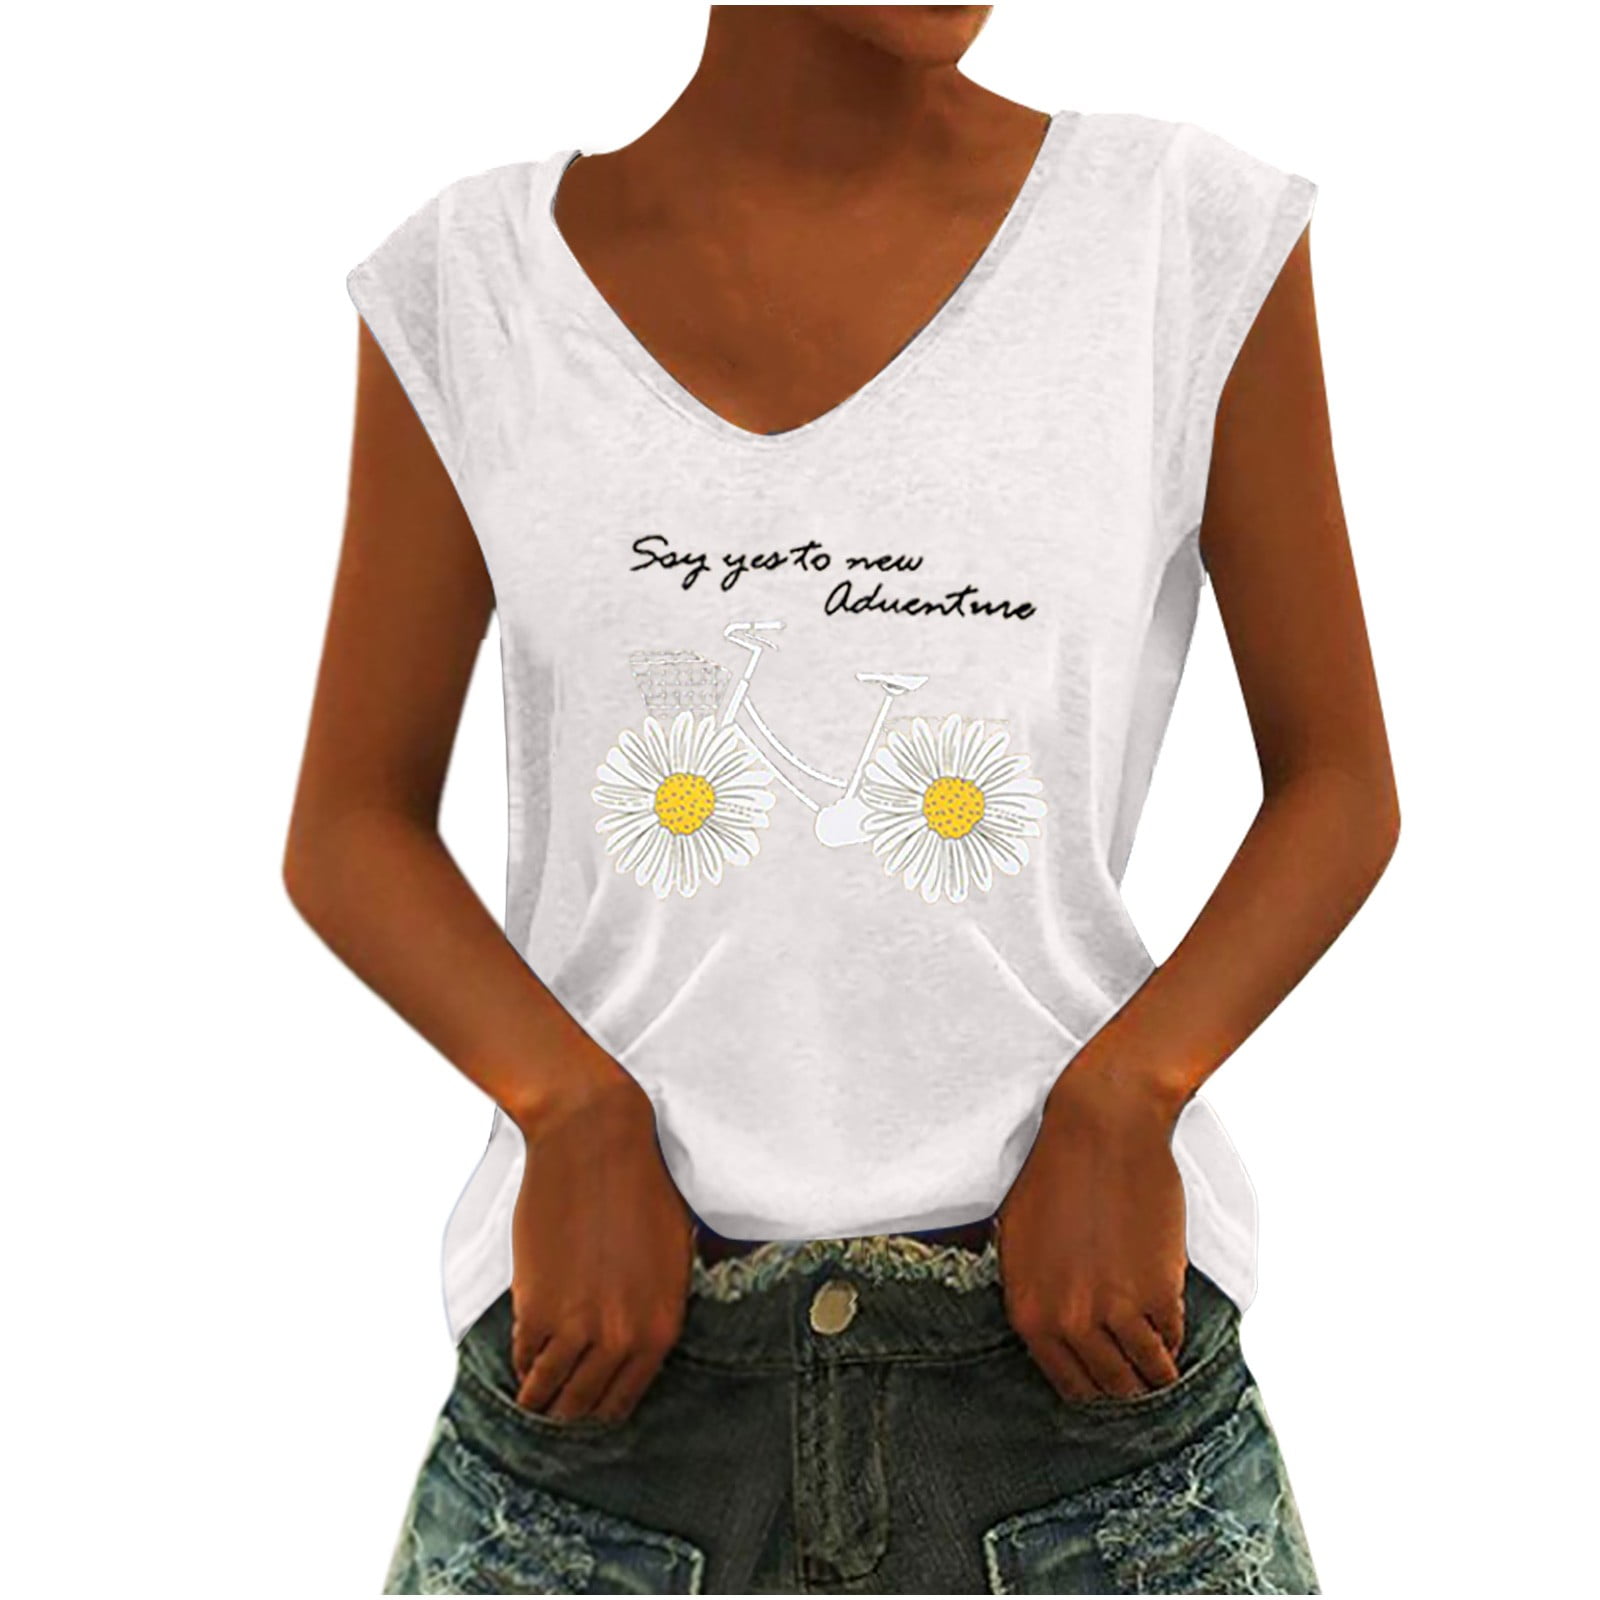 Honeeladyy Sales Online Say You to New Adventure Shirt Women Summer Tank Tops Daisy Wheel Bike Print Pattern Blouse Sleeveless V Neck Vest Tee